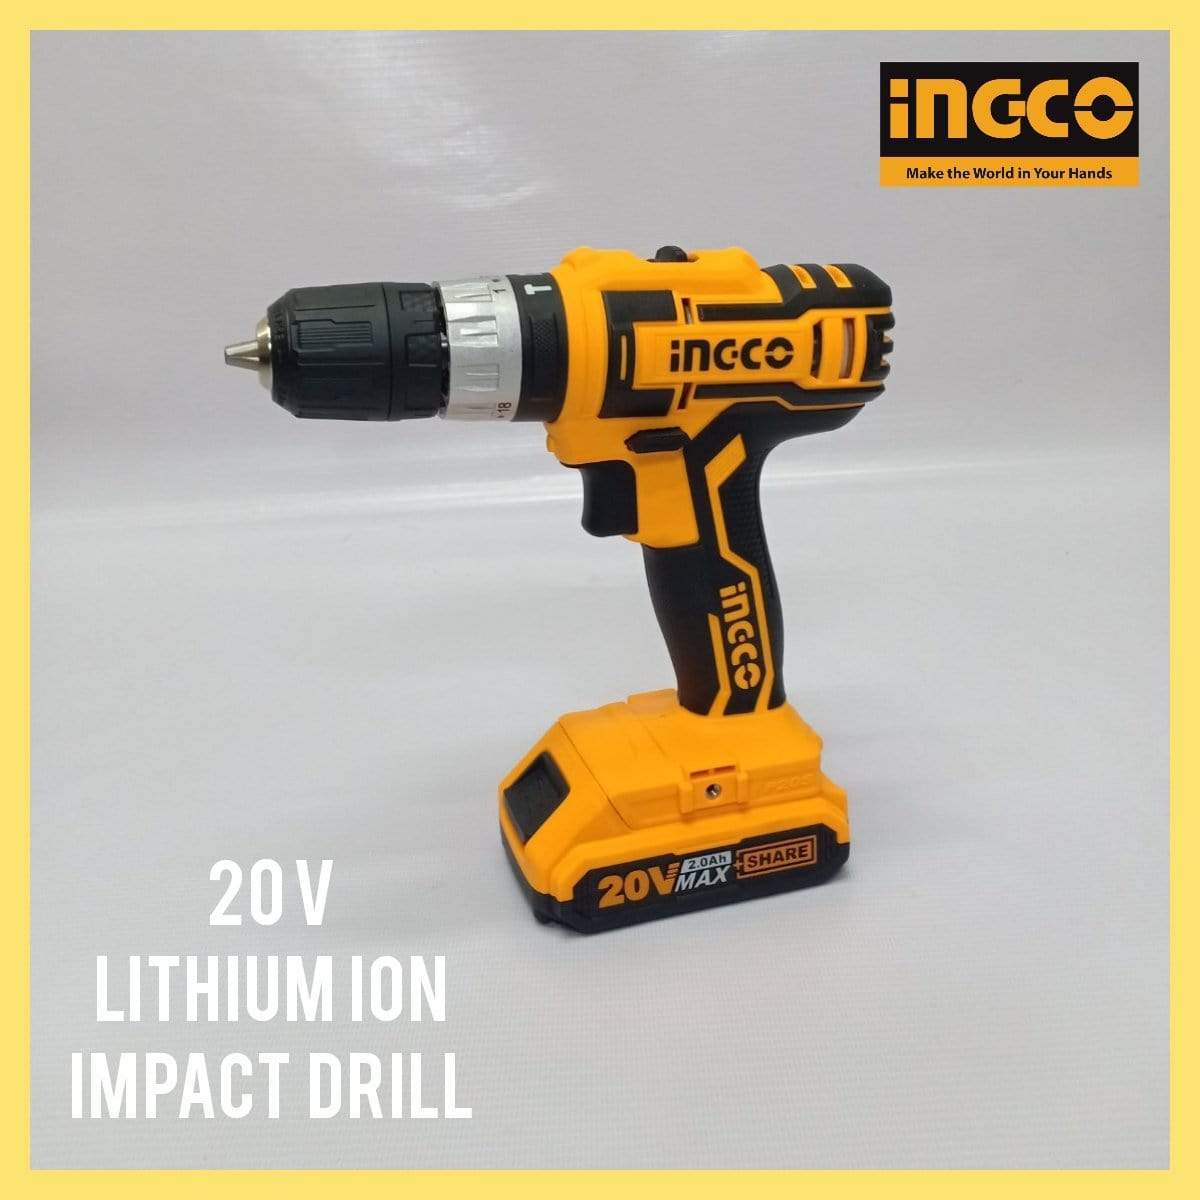 Ingco Lithium-Ion Cordless Hammer Impact Drill 20V - CIDLI20025 | Supply Master | Accra, Ghana Tools Building Steel Engineering Hardware tool